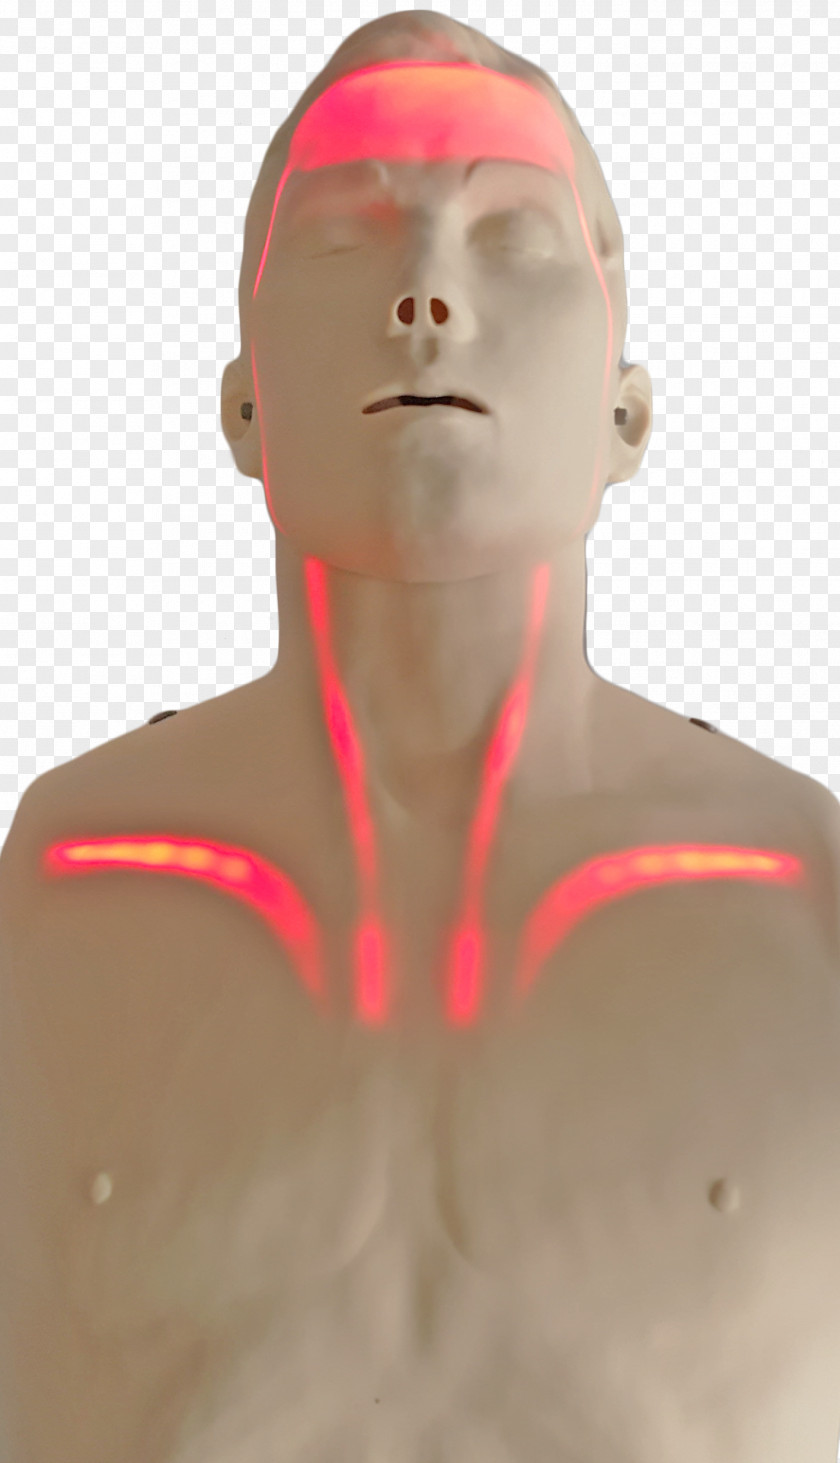 Transparent Anatomical Manikin Mannequin Automated External Defibrillators Cardiopulmonary Resuscitation First Aid Supplies PNG